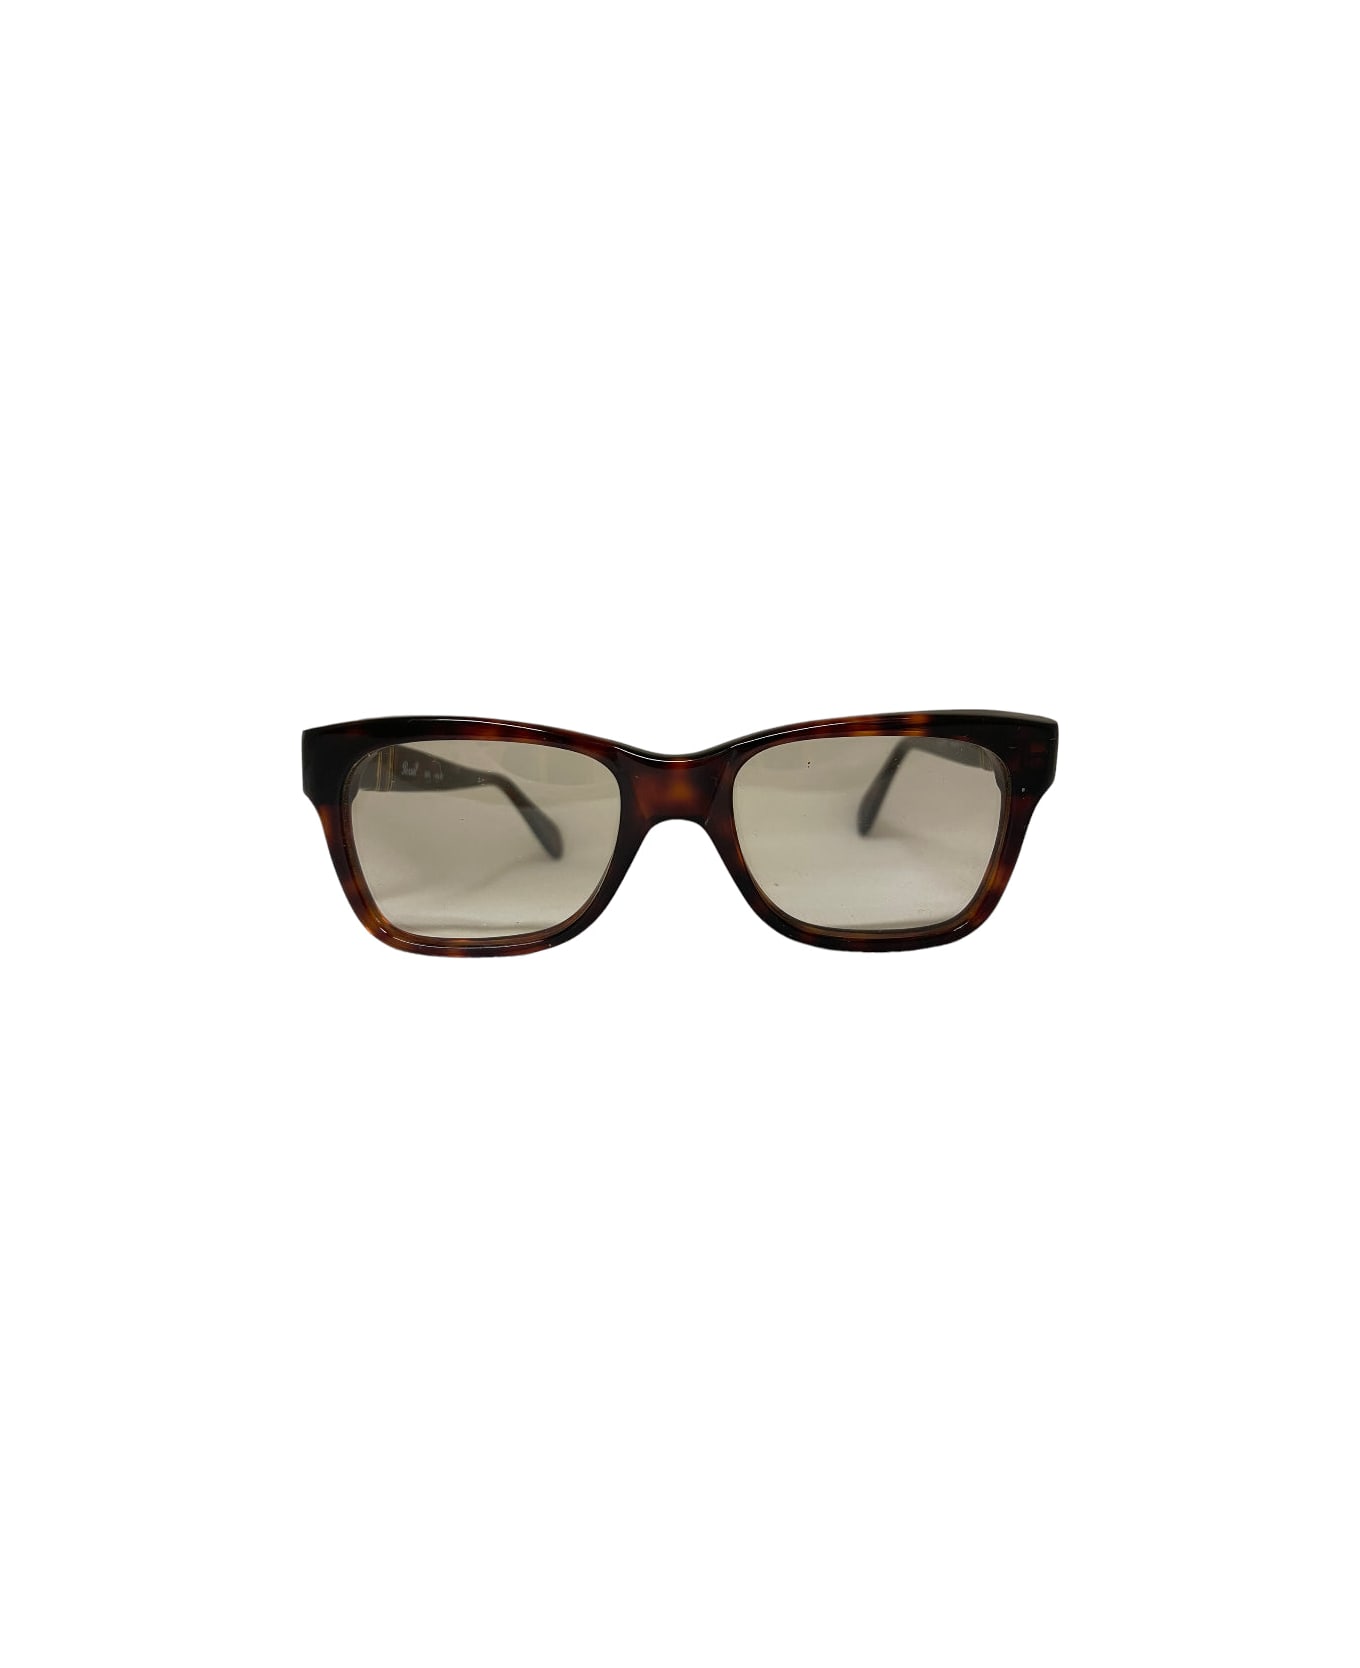 Persol 305 - Havana Sunglasses